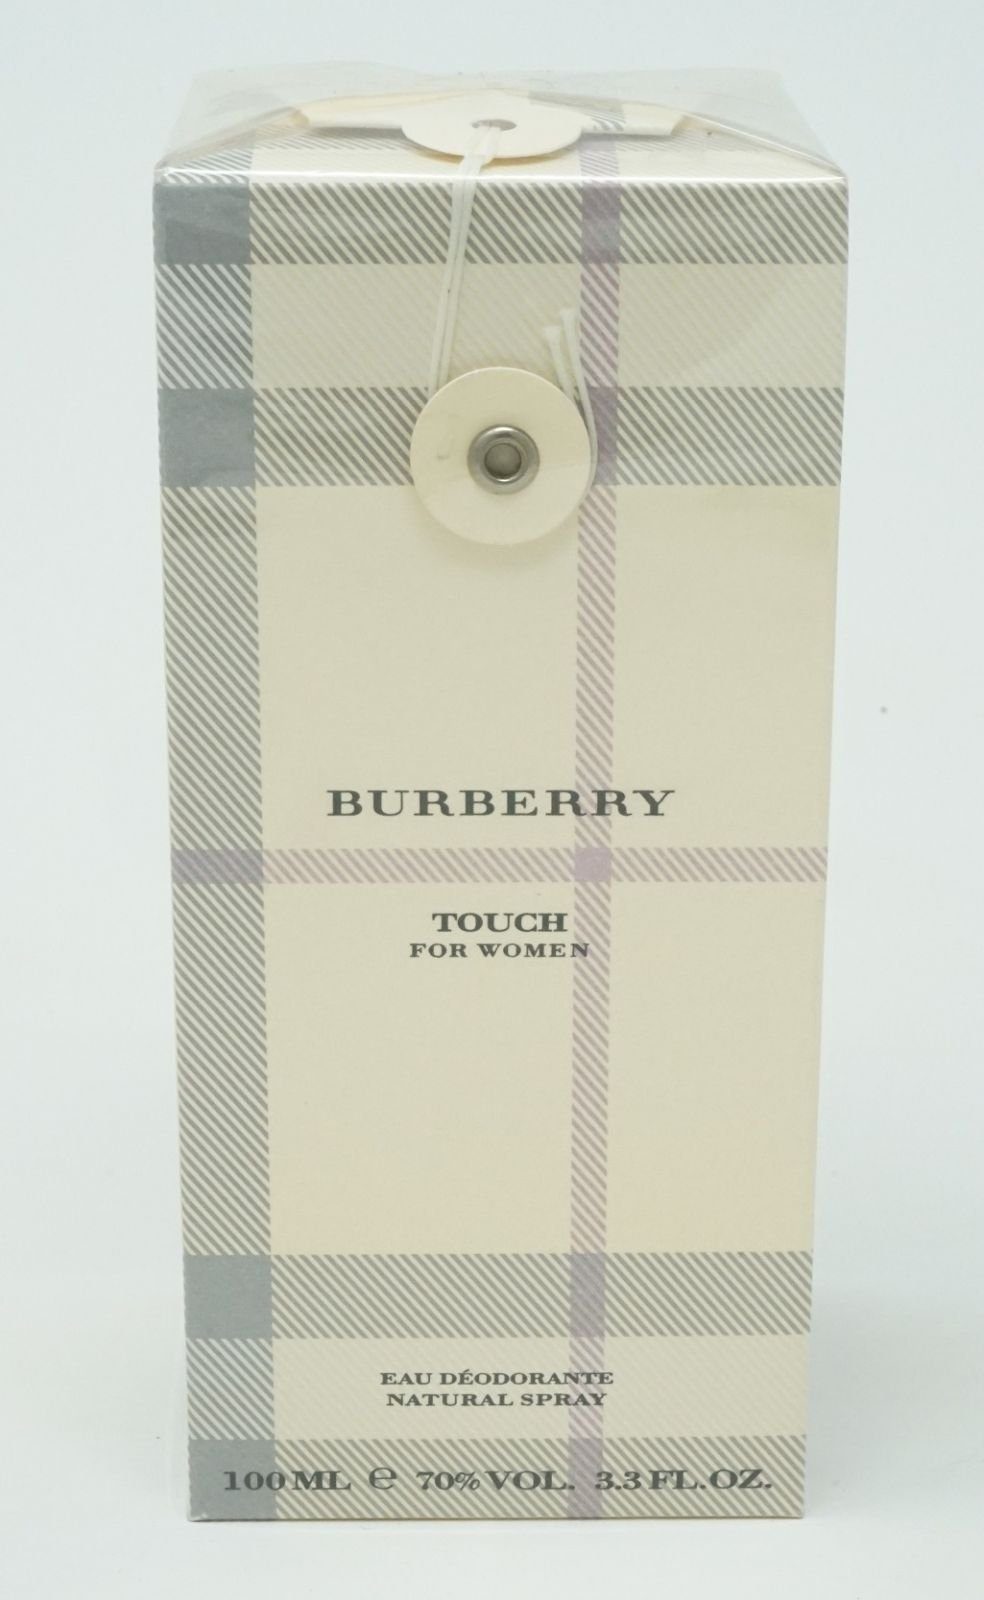 BURBERRY Körperspray Burberry Spray Women Touch For 100ml Deodorant